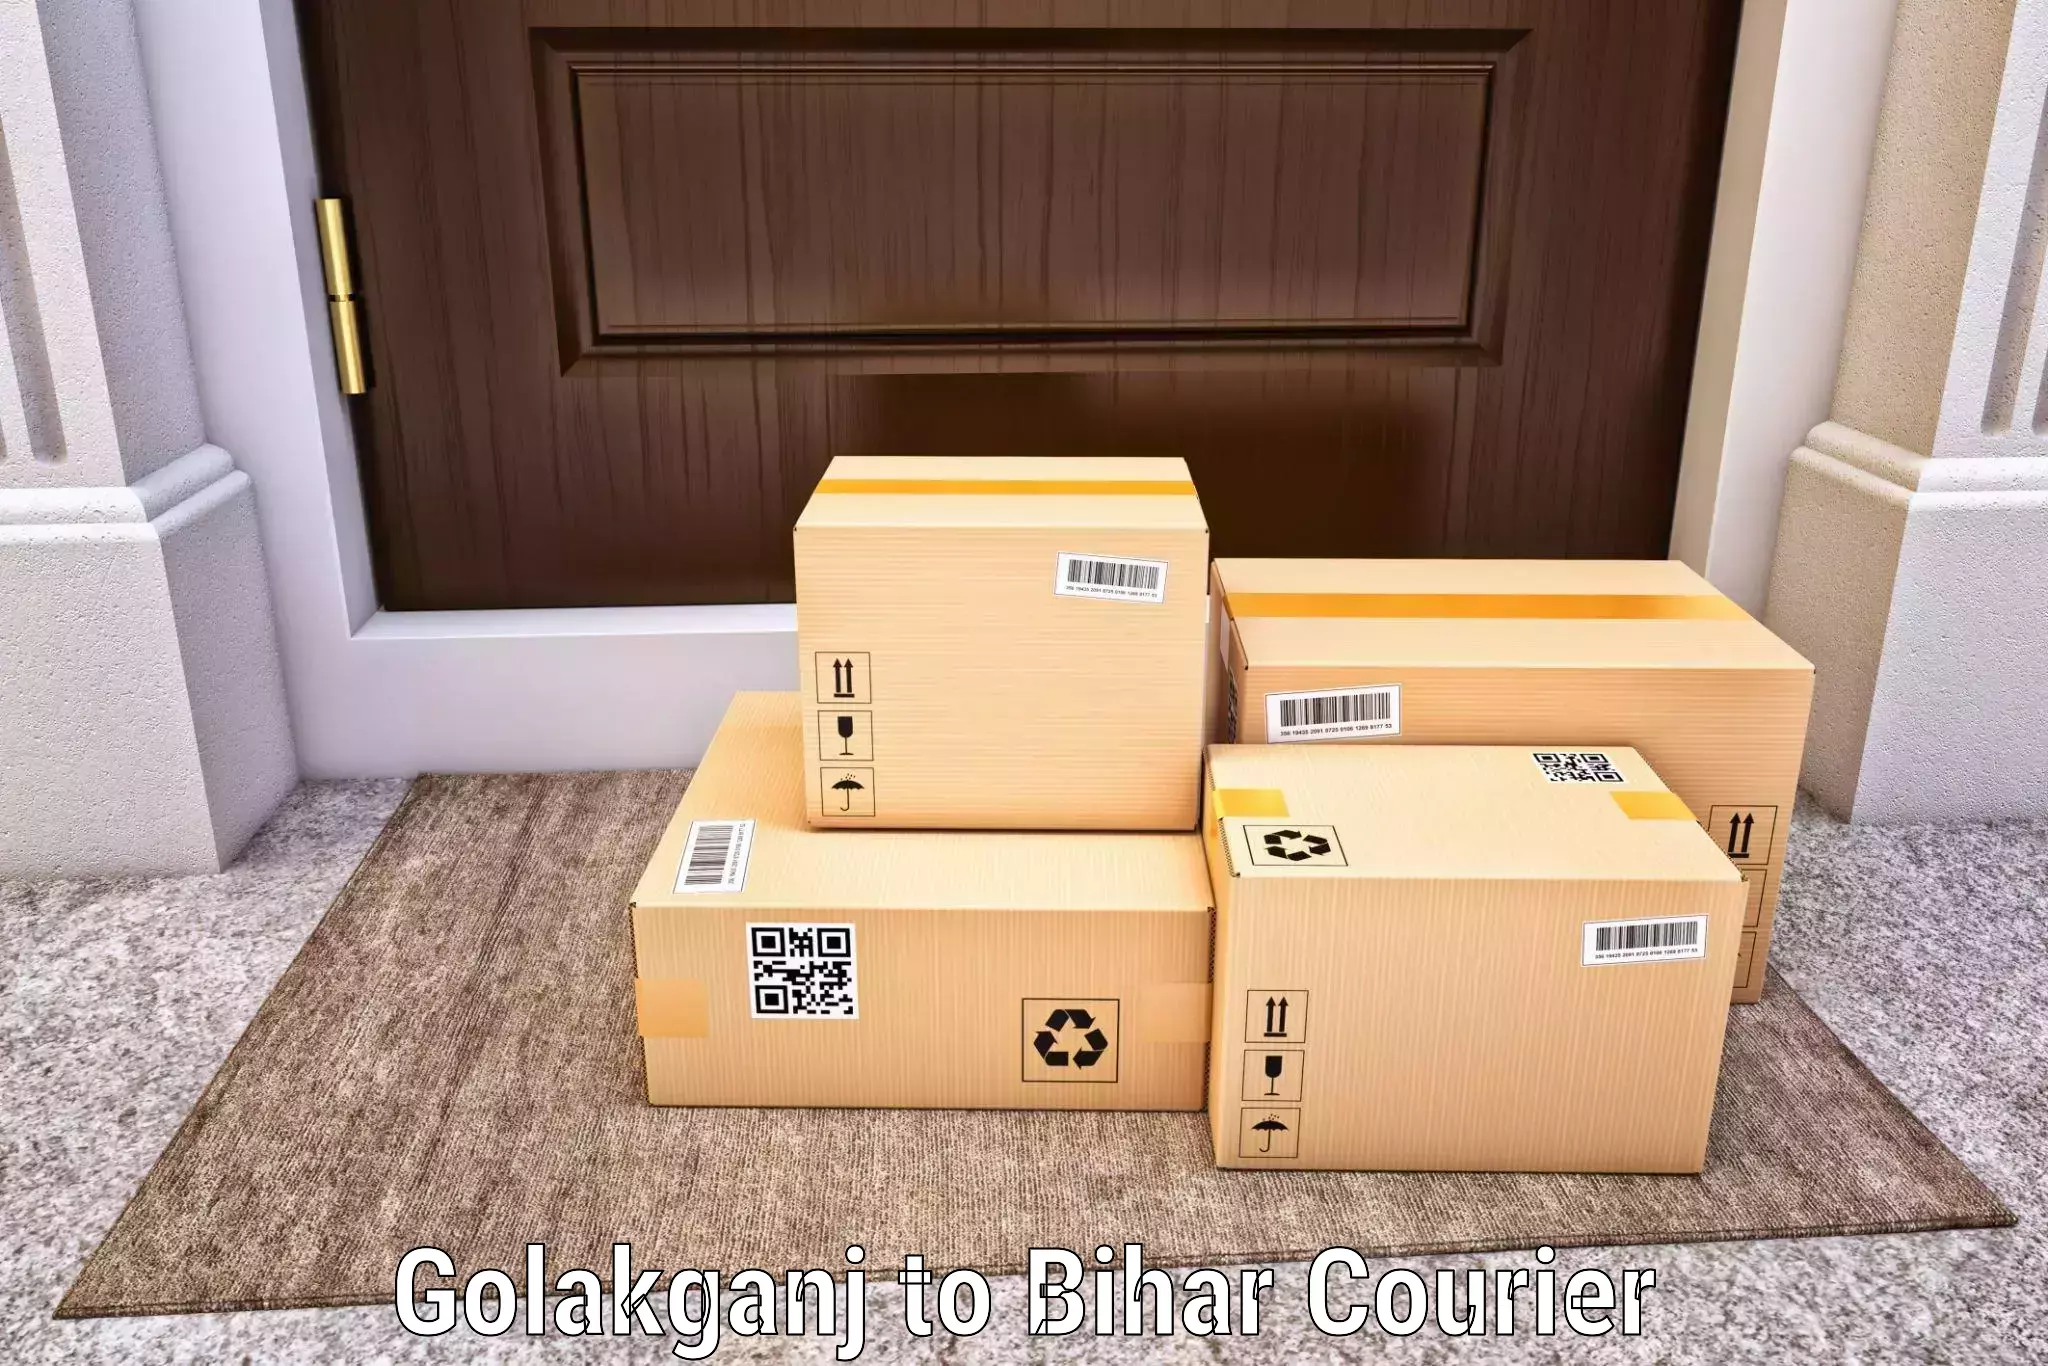 State-of-the-art courier technology Golakganj to Malmaliya